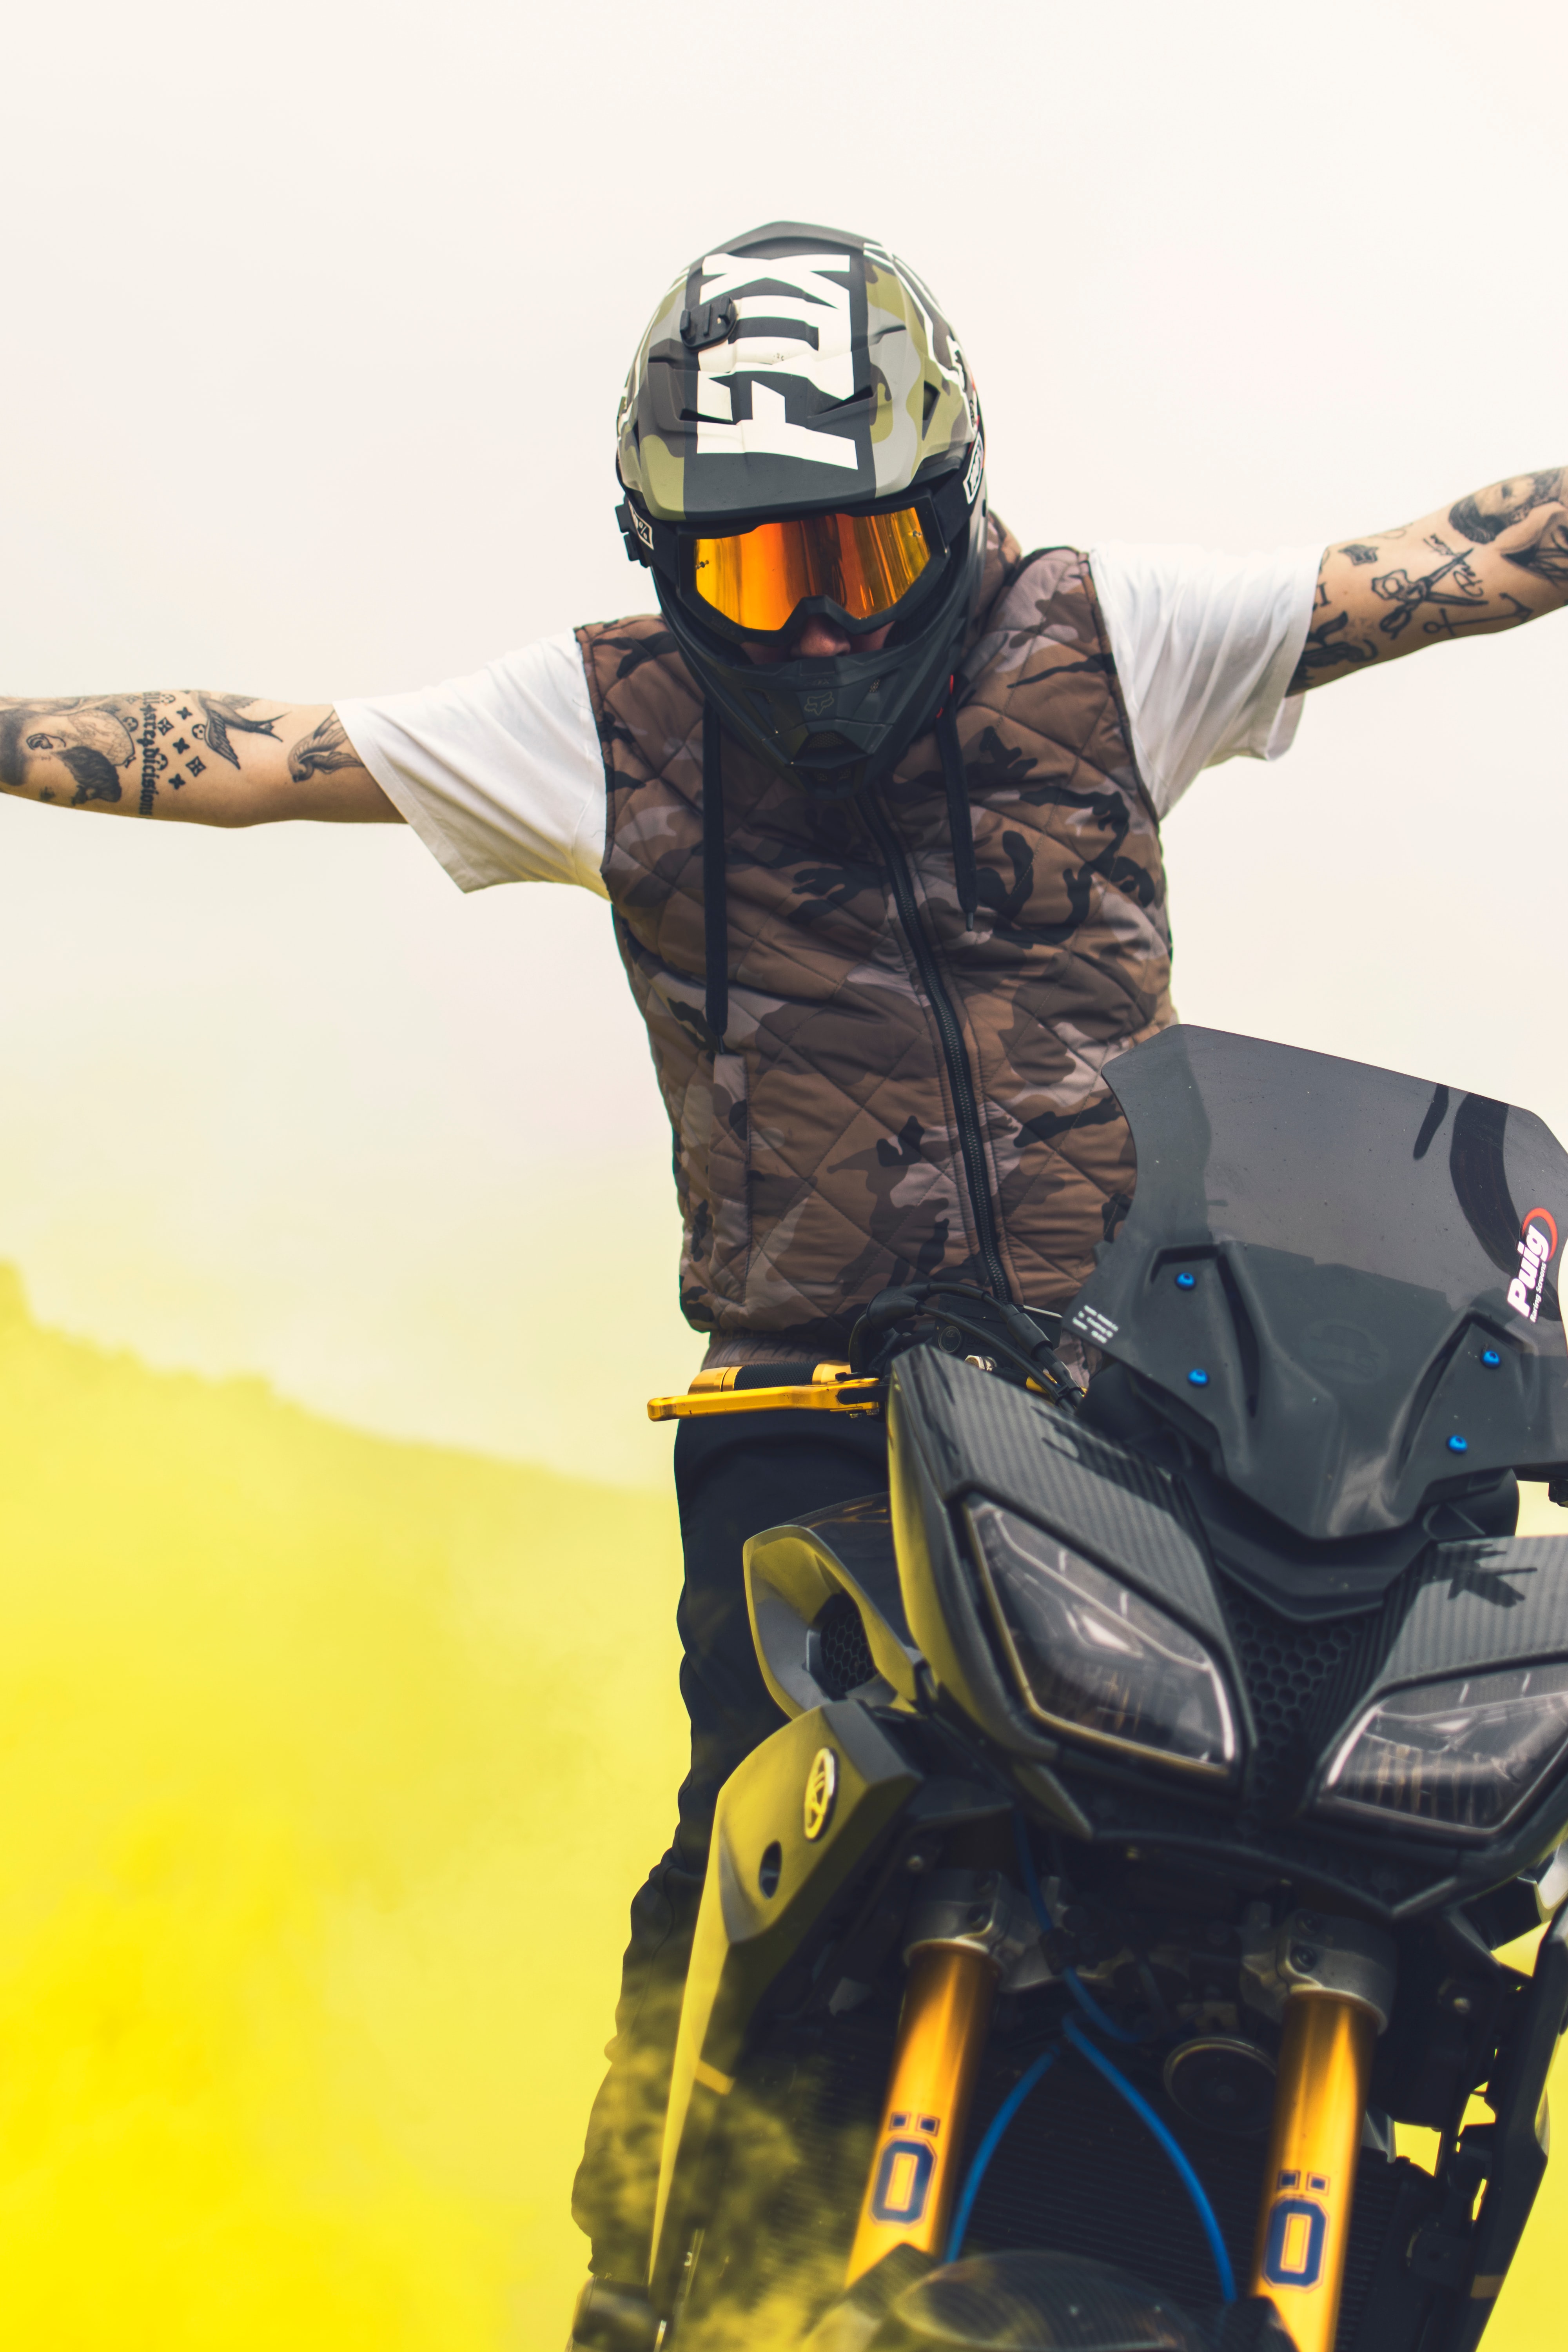 vertical wallpaper smoke, motorcycles, yamaha, yellow, motorcyclist, helmet, motorcycle, gesture